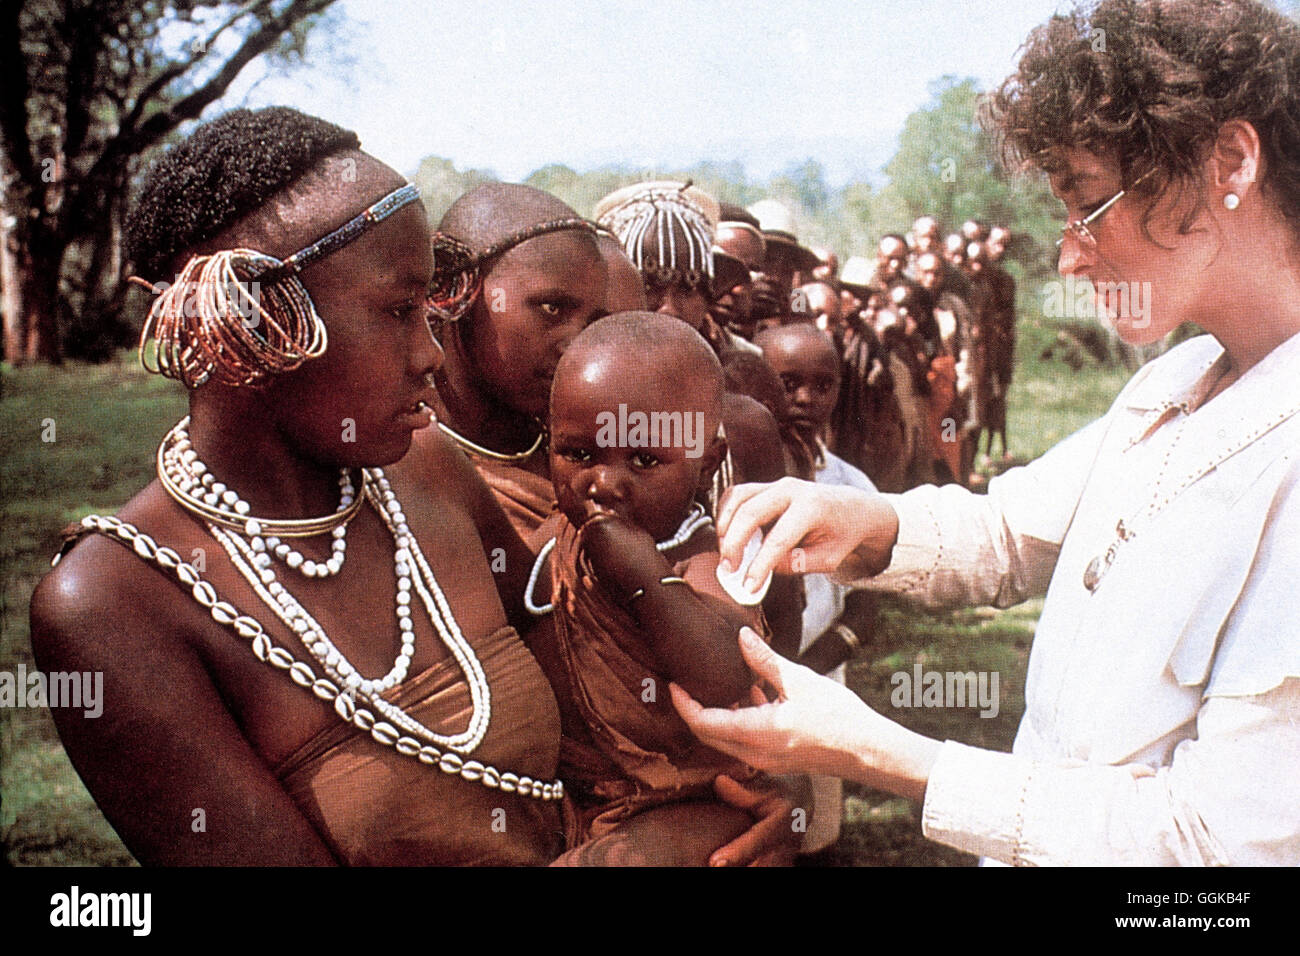 JENSEITS VON AFRIKA / Out of Africa USA 1985 / Sidney Pollack Szene mit MERYL STREEP (Baronin Blixen). Regie: Sidney Pollack aka. Out of Africa Stock Photo